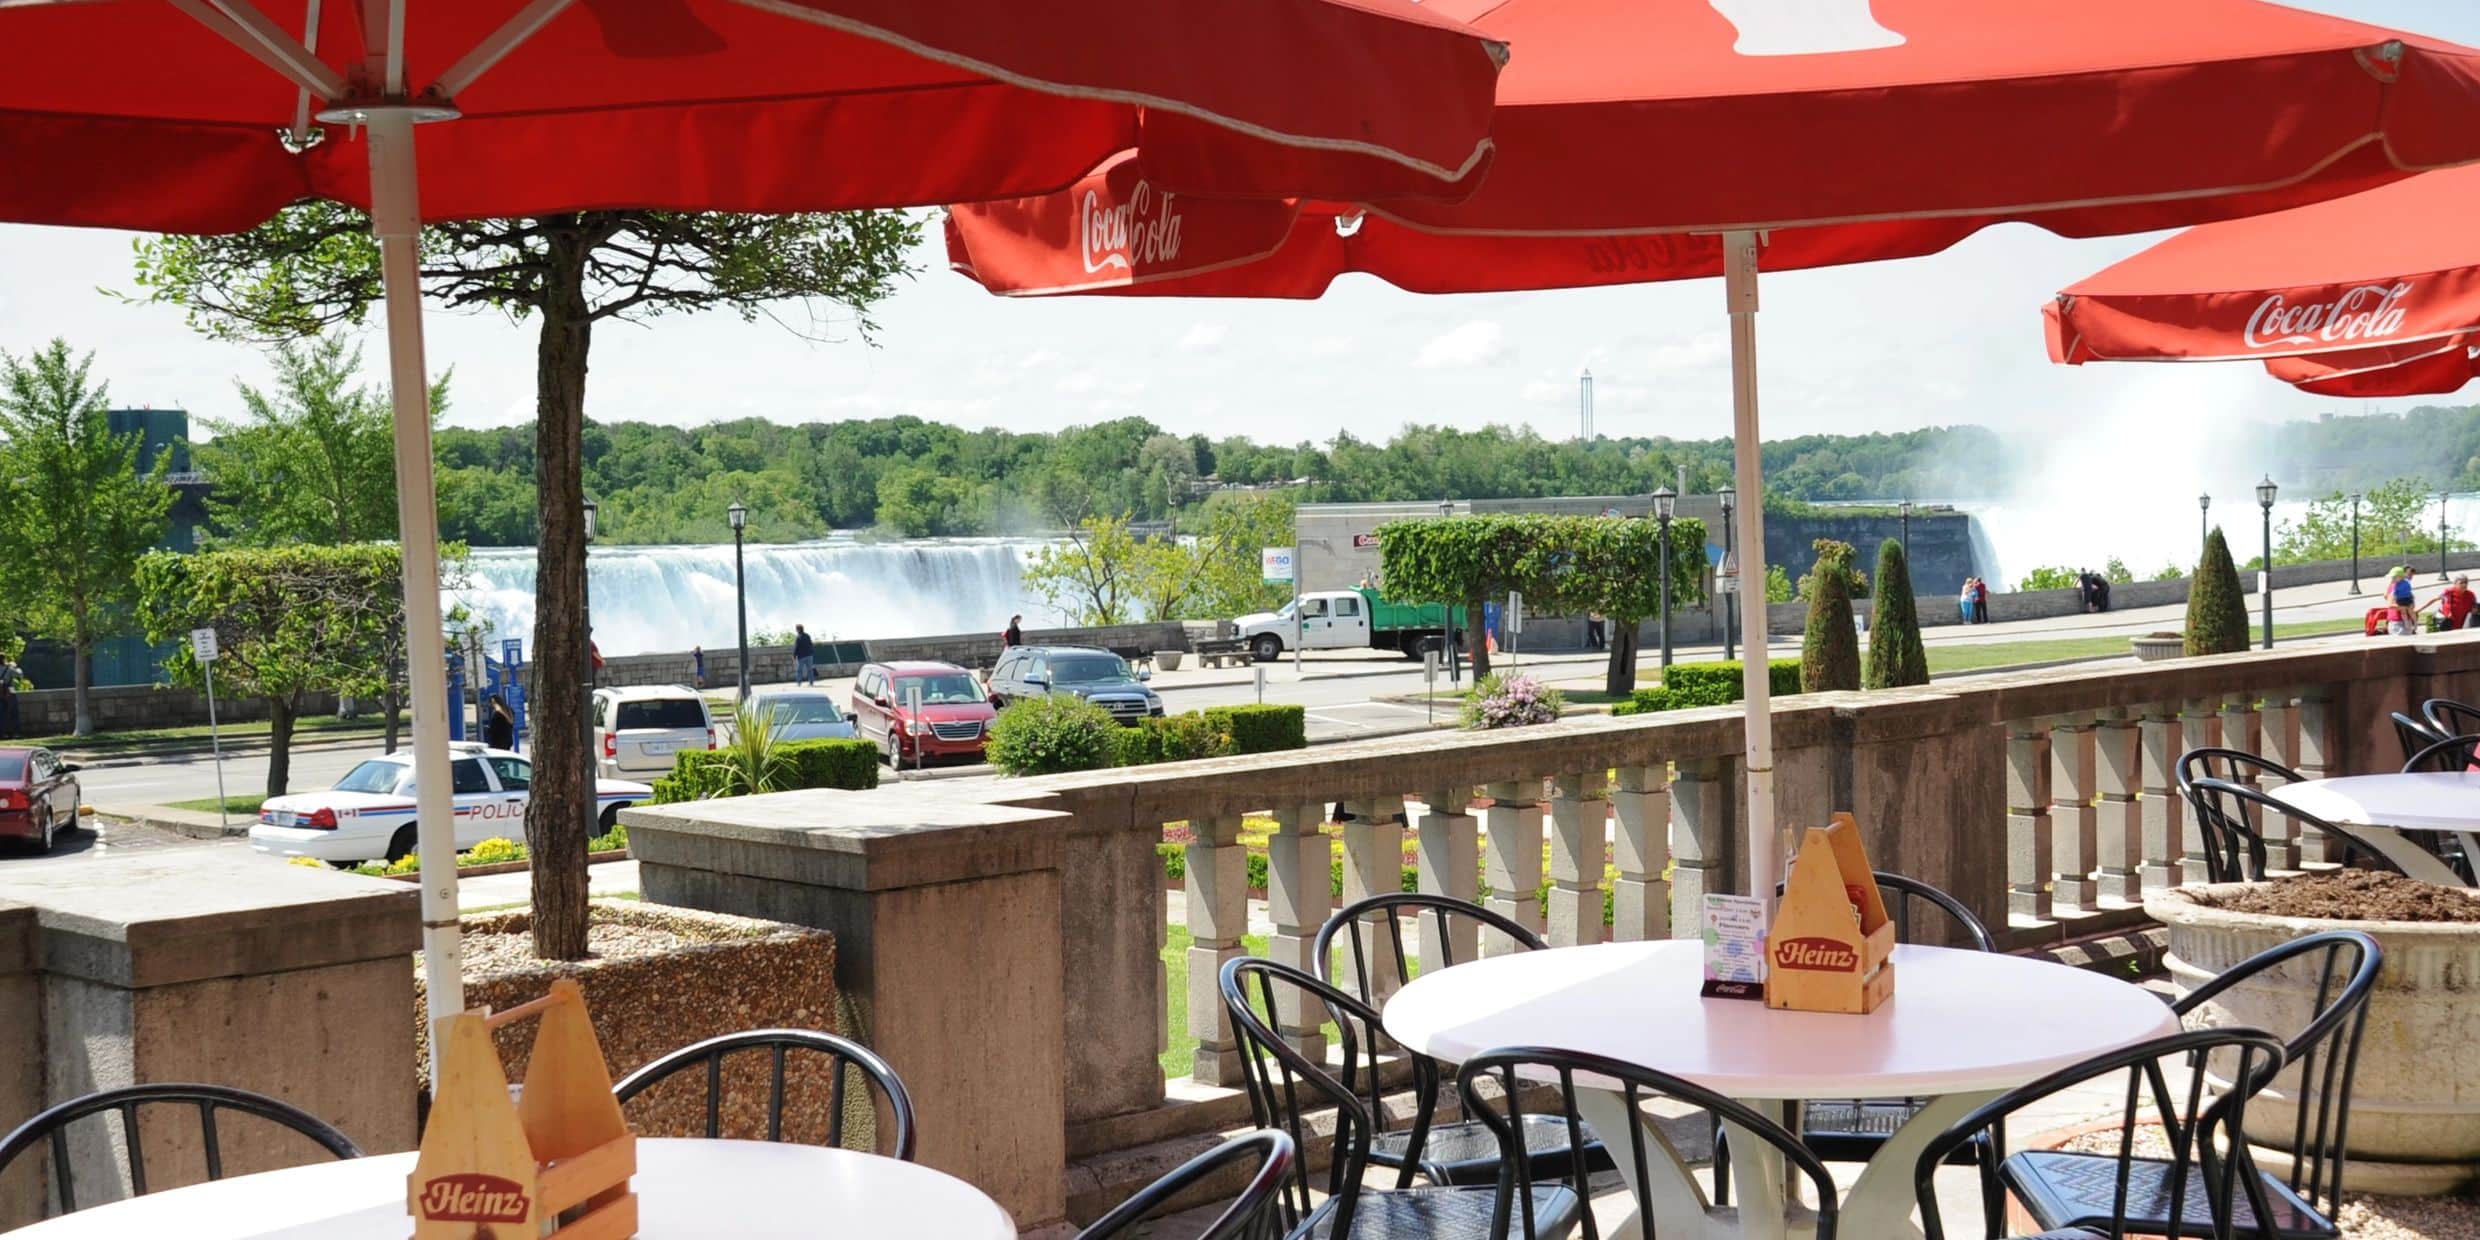 The Secret Garden Restaurant in Niagara Falls overlooks the American Falls